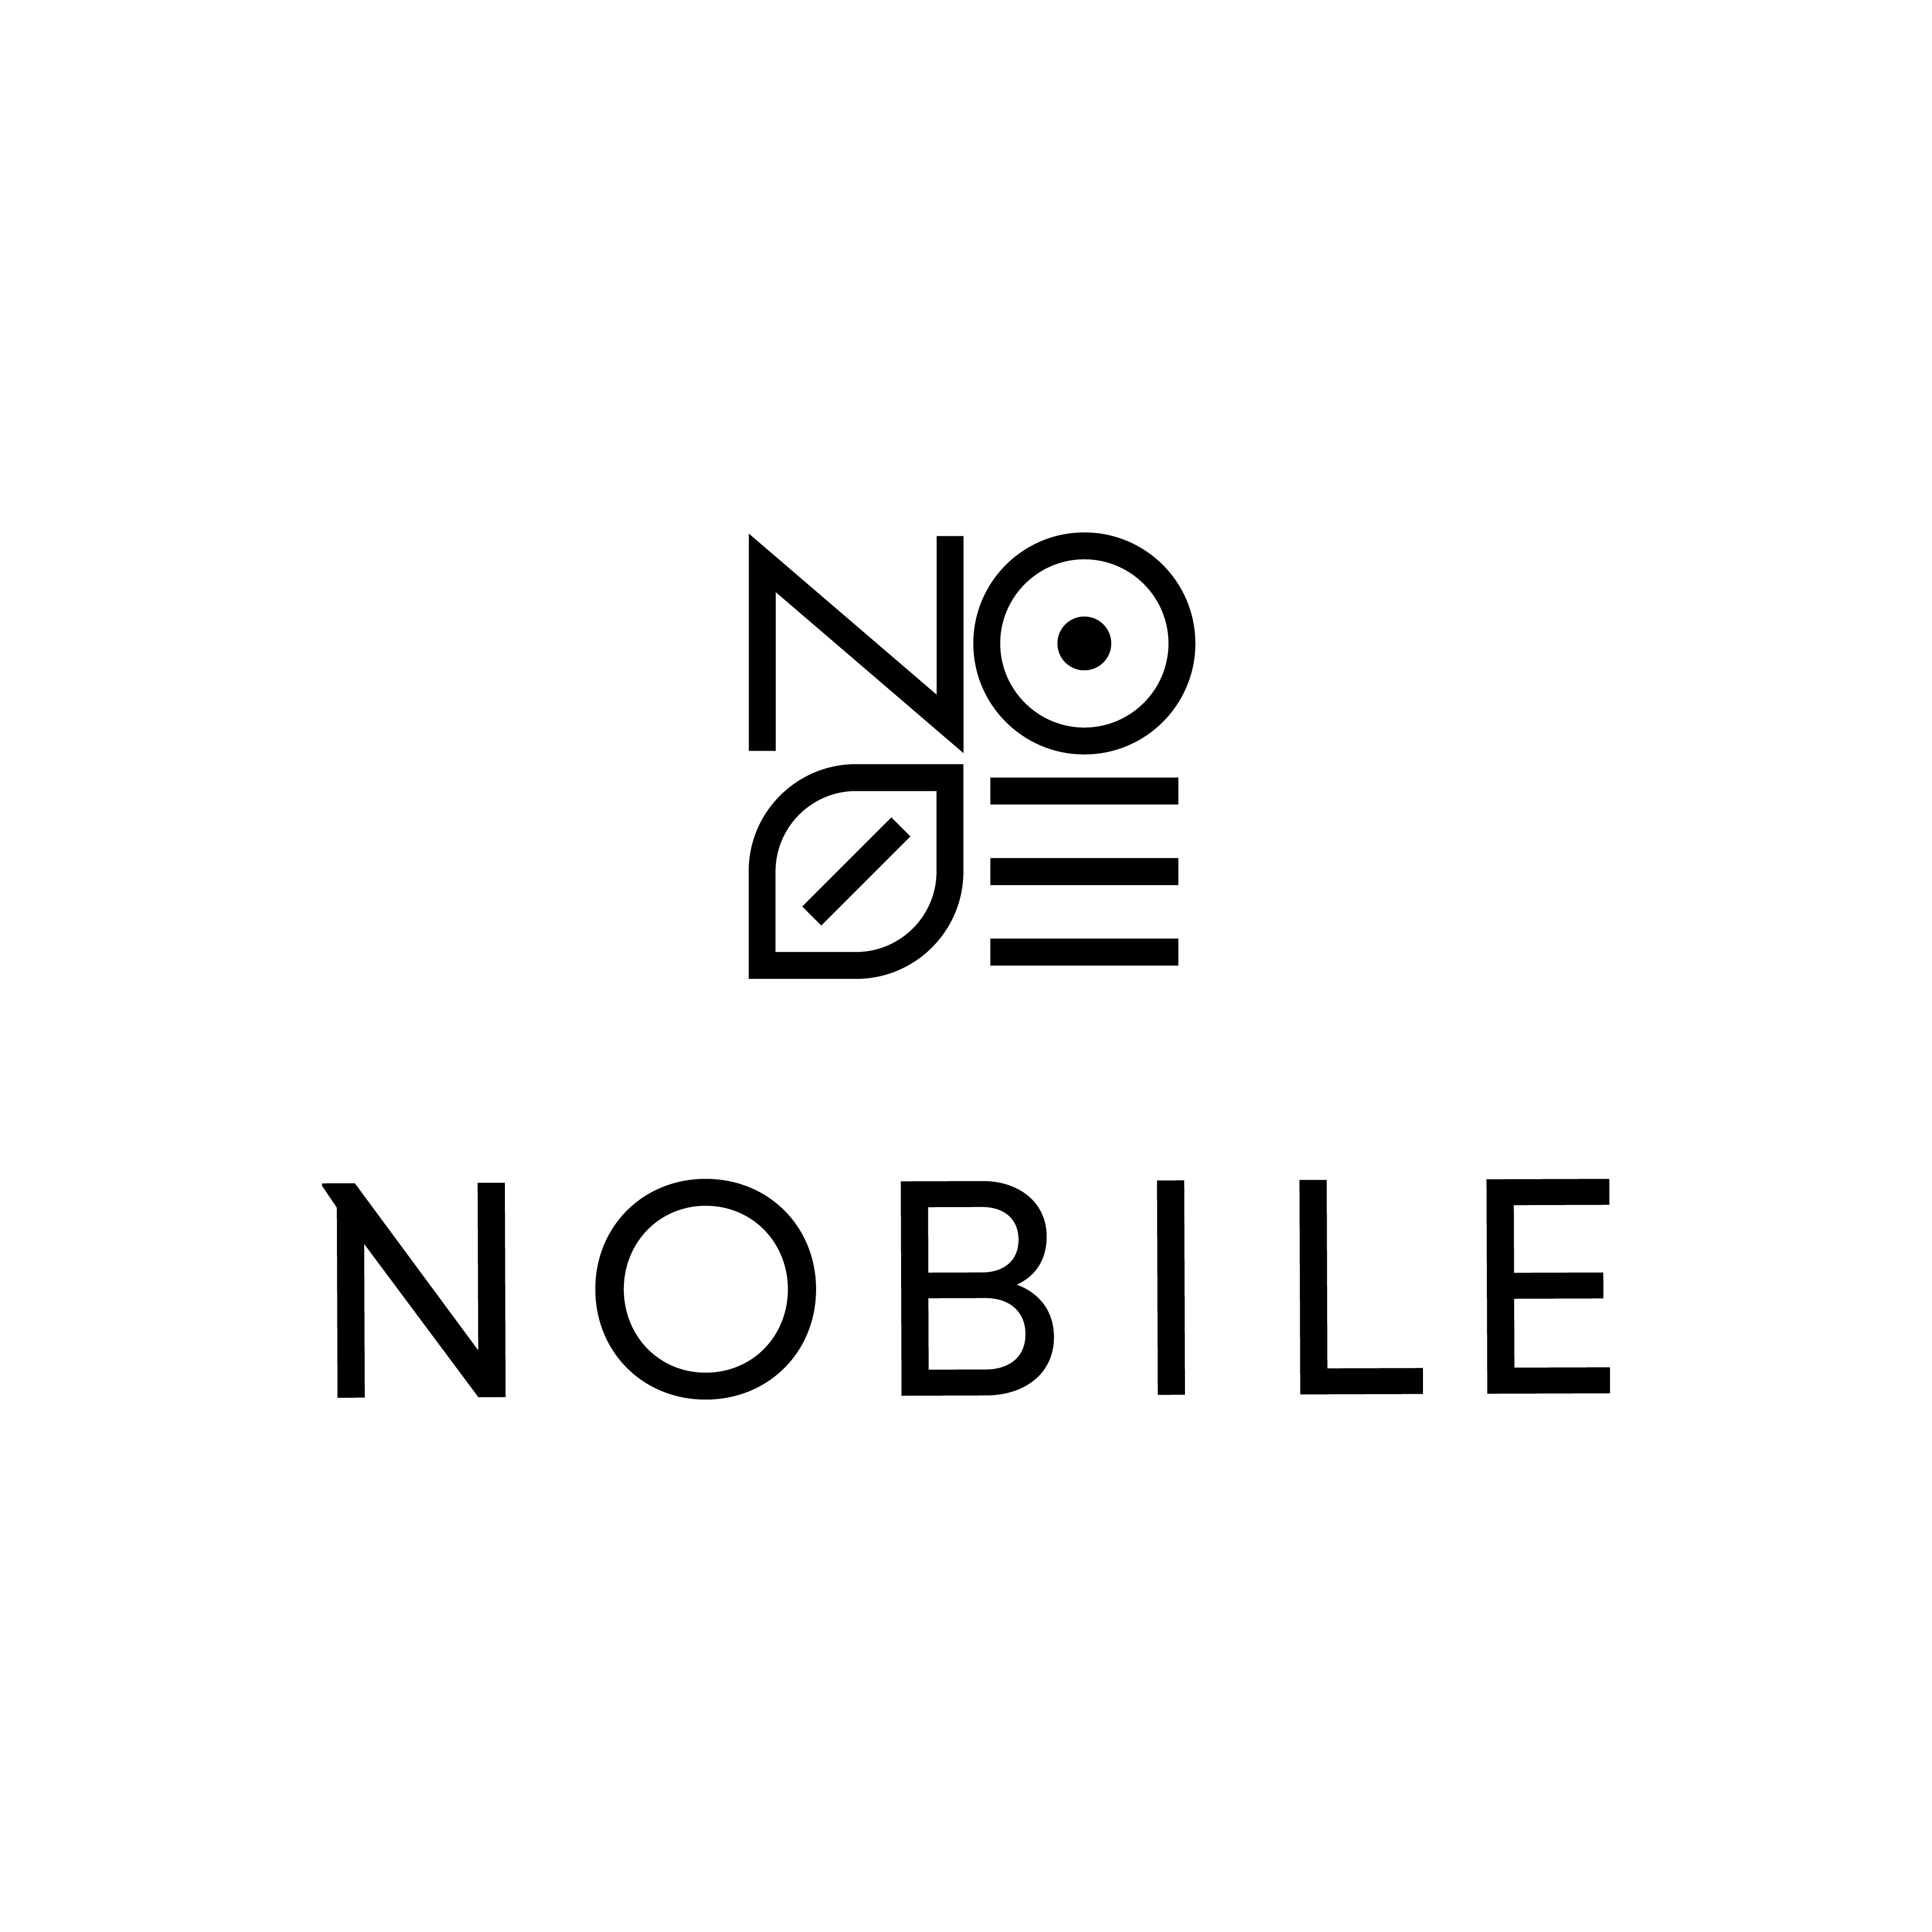 Nobile logo design by logo designer Francesco Bonetti for your inspiration and for the worlds largest logo competition